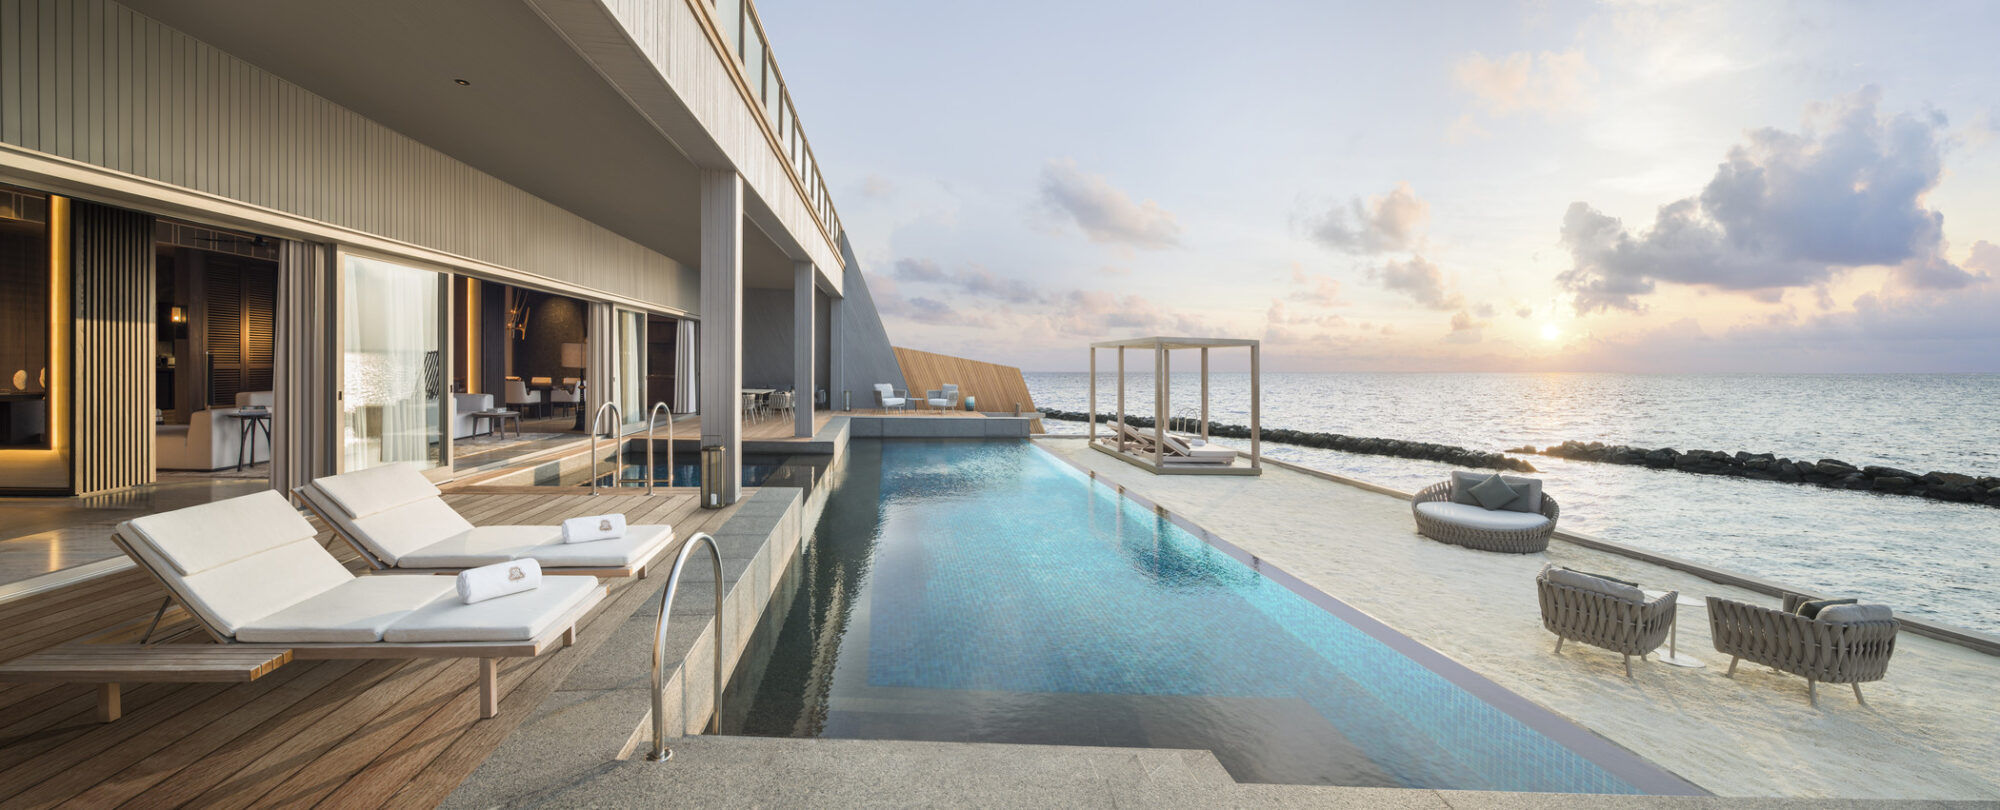 The St. Regis Maldives Vommuli Resort - John Jacob Astor Estate - Main Terrace Daytime